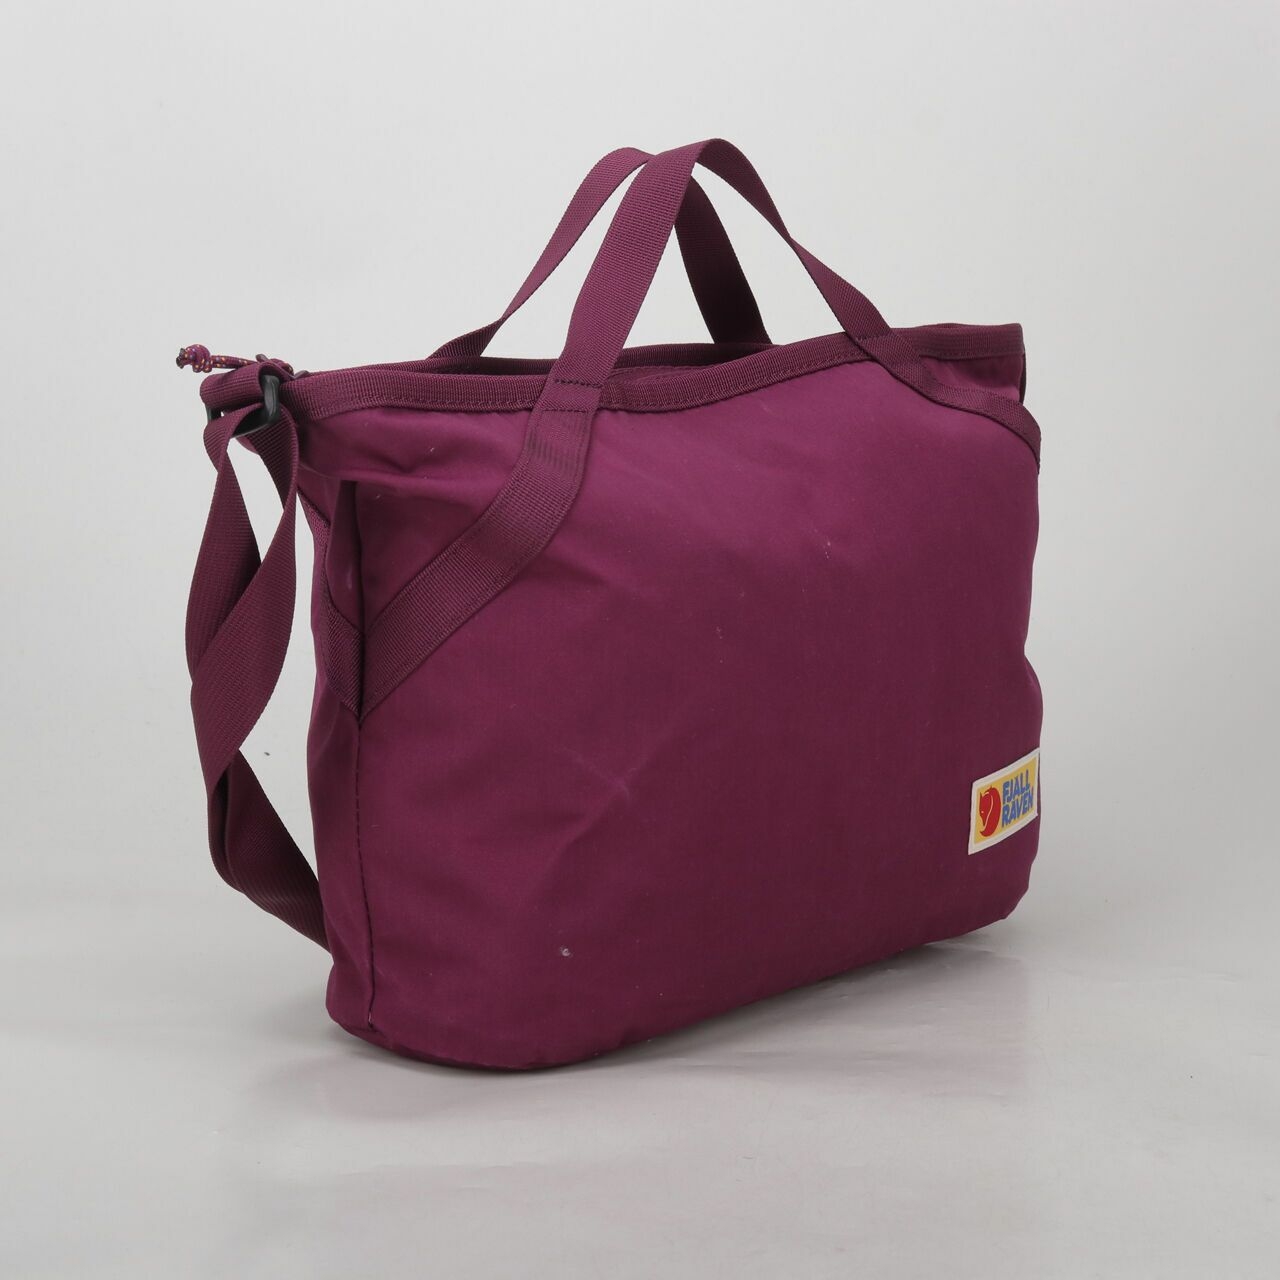 FJALLRAVEN KANKEN Verdag Royal Purple Satchel Bag